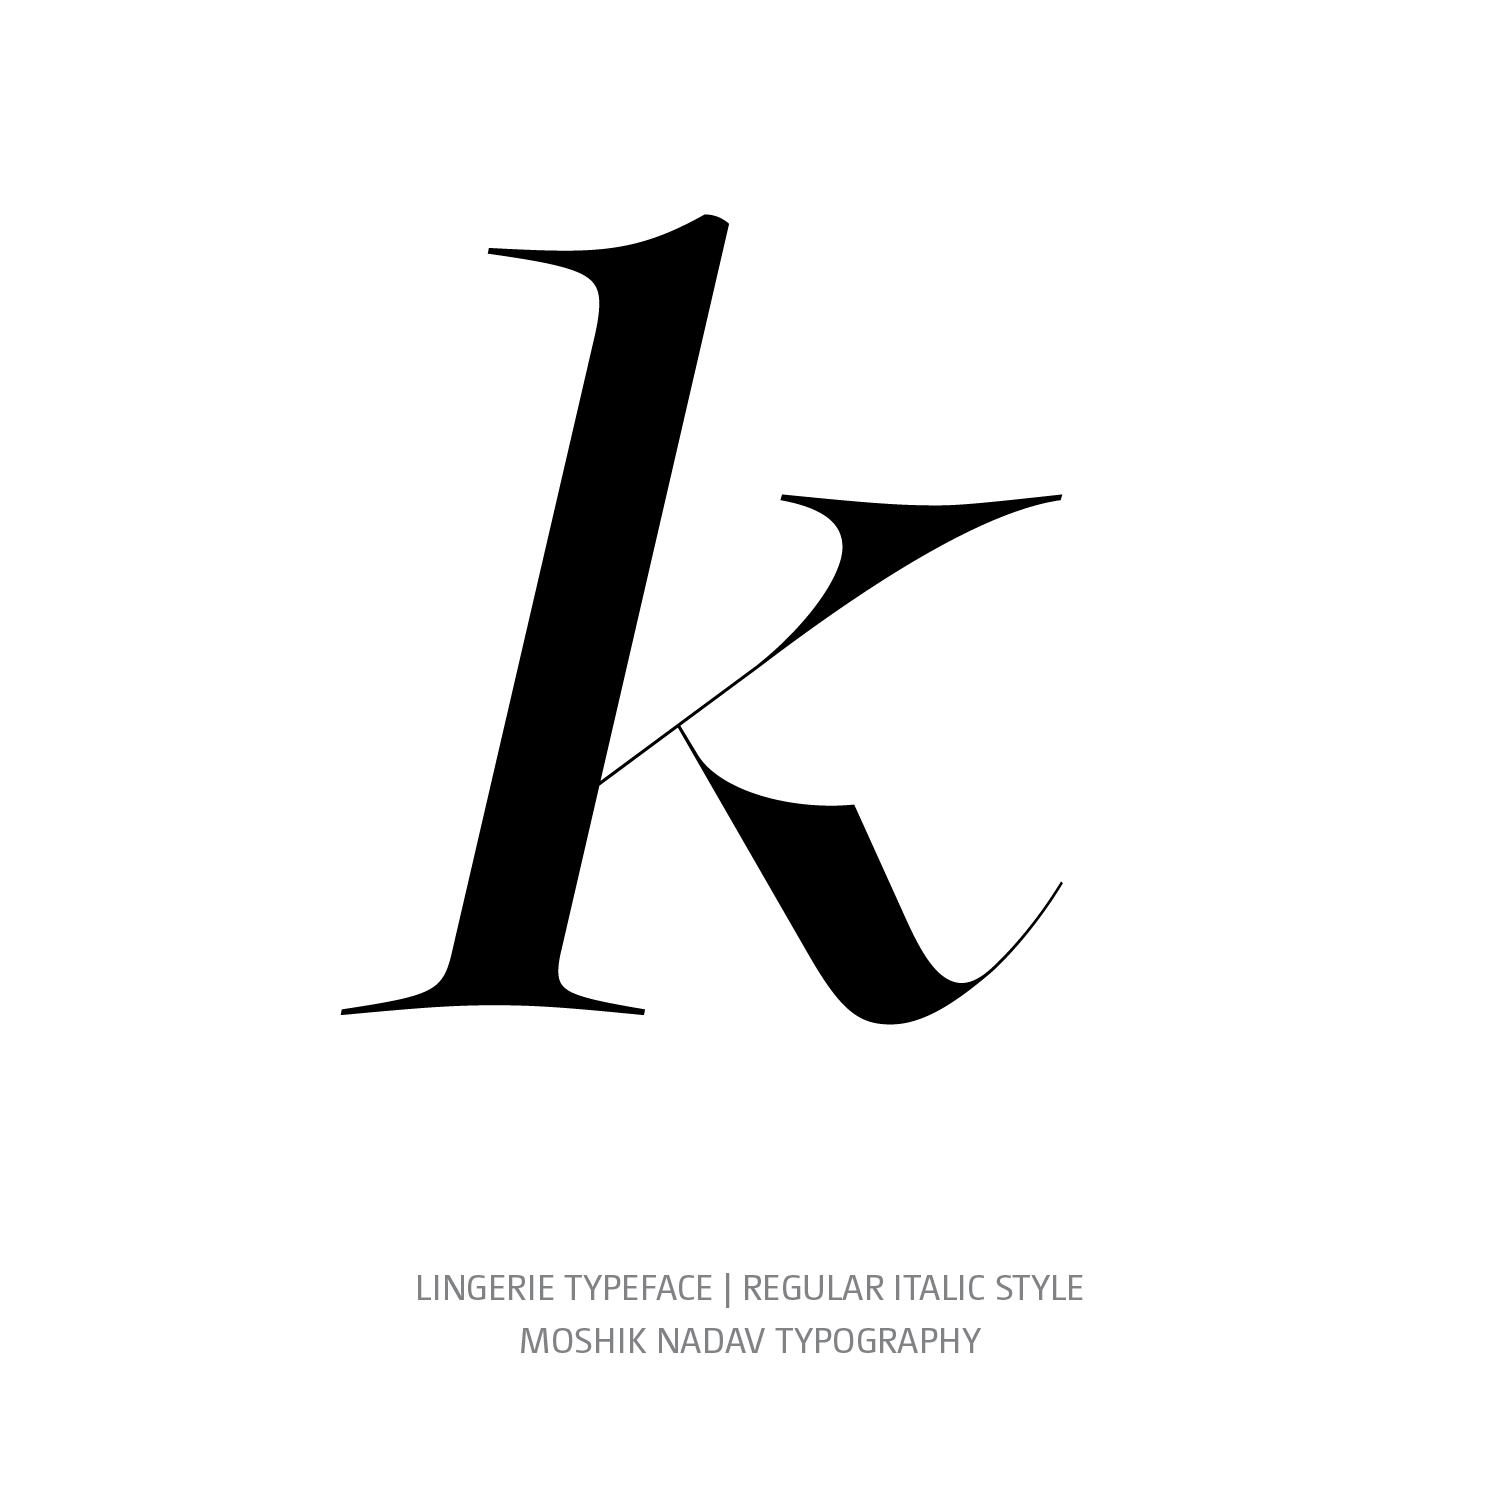 Lingerie Typeface Regular Italic k - Fashion fonts by Moshik Nadav Typography